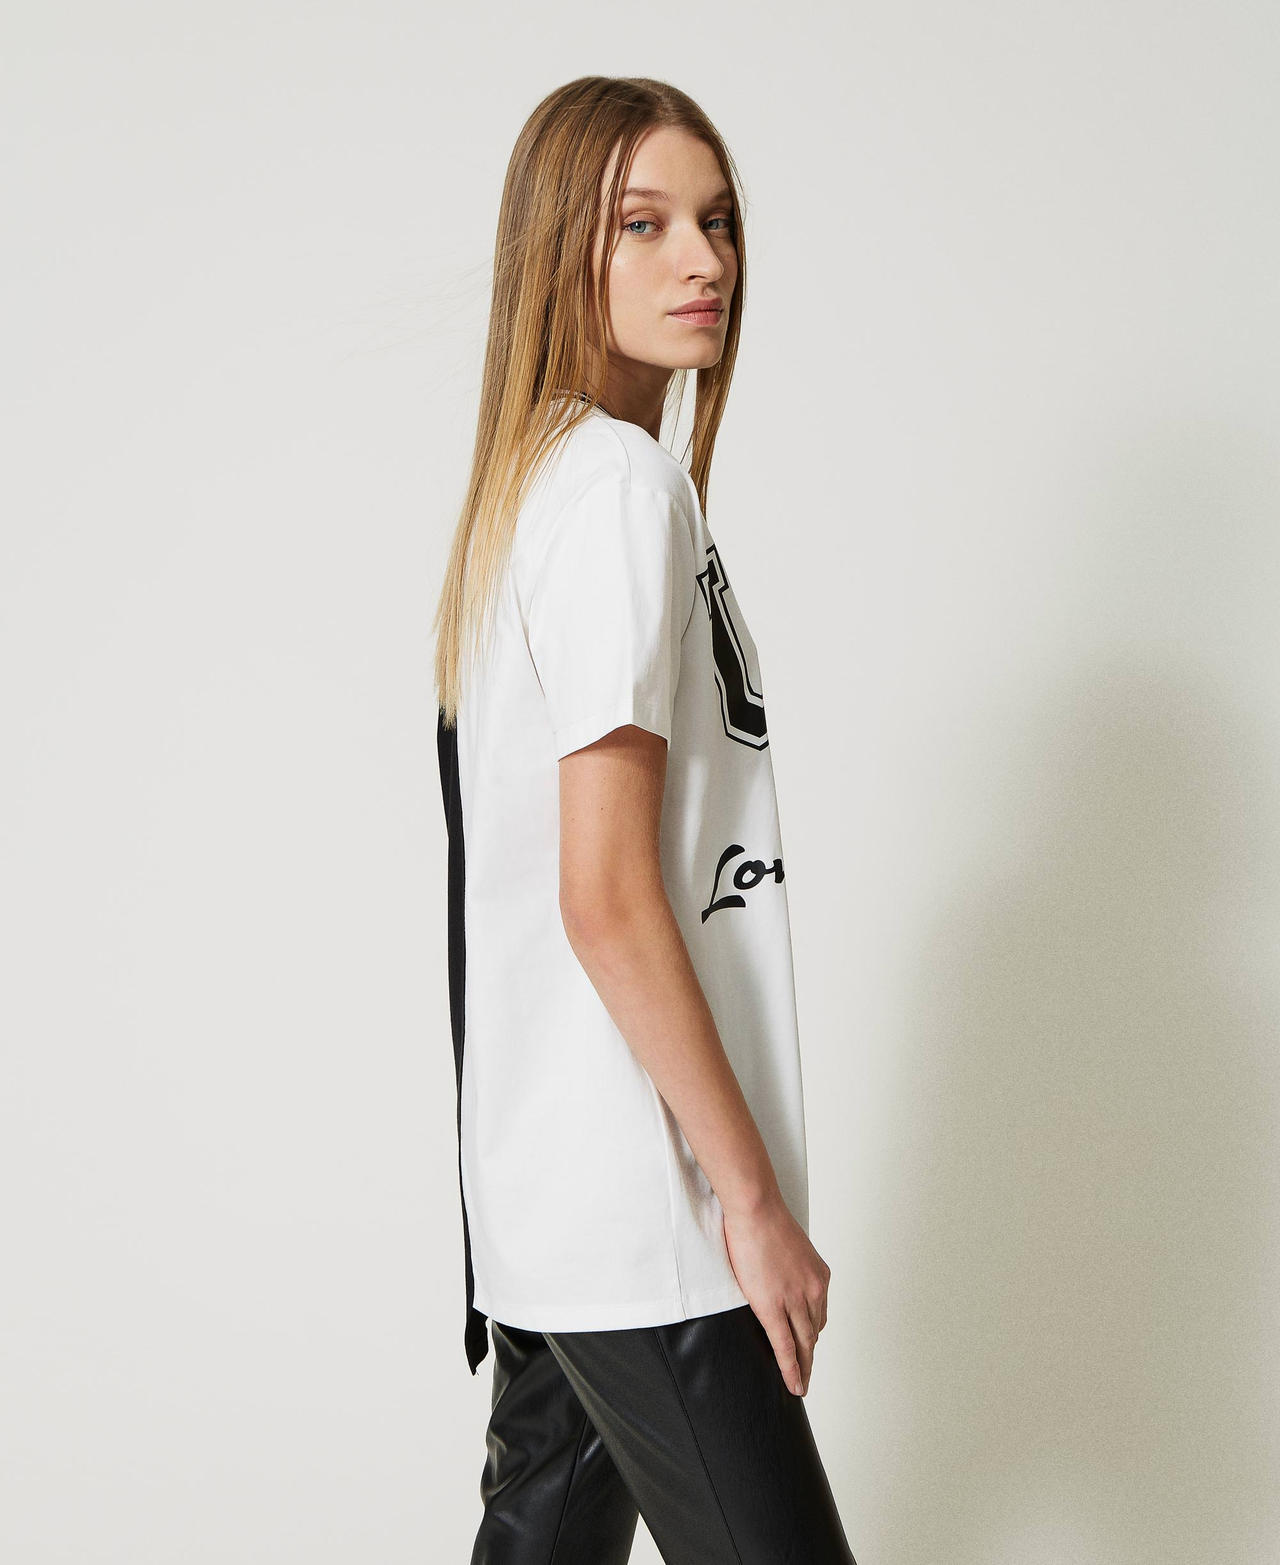 Maxi t-shirt bicolore avec logo Bicolore Blanc « Sugar »/Noir Femme 231LL2RDD-02